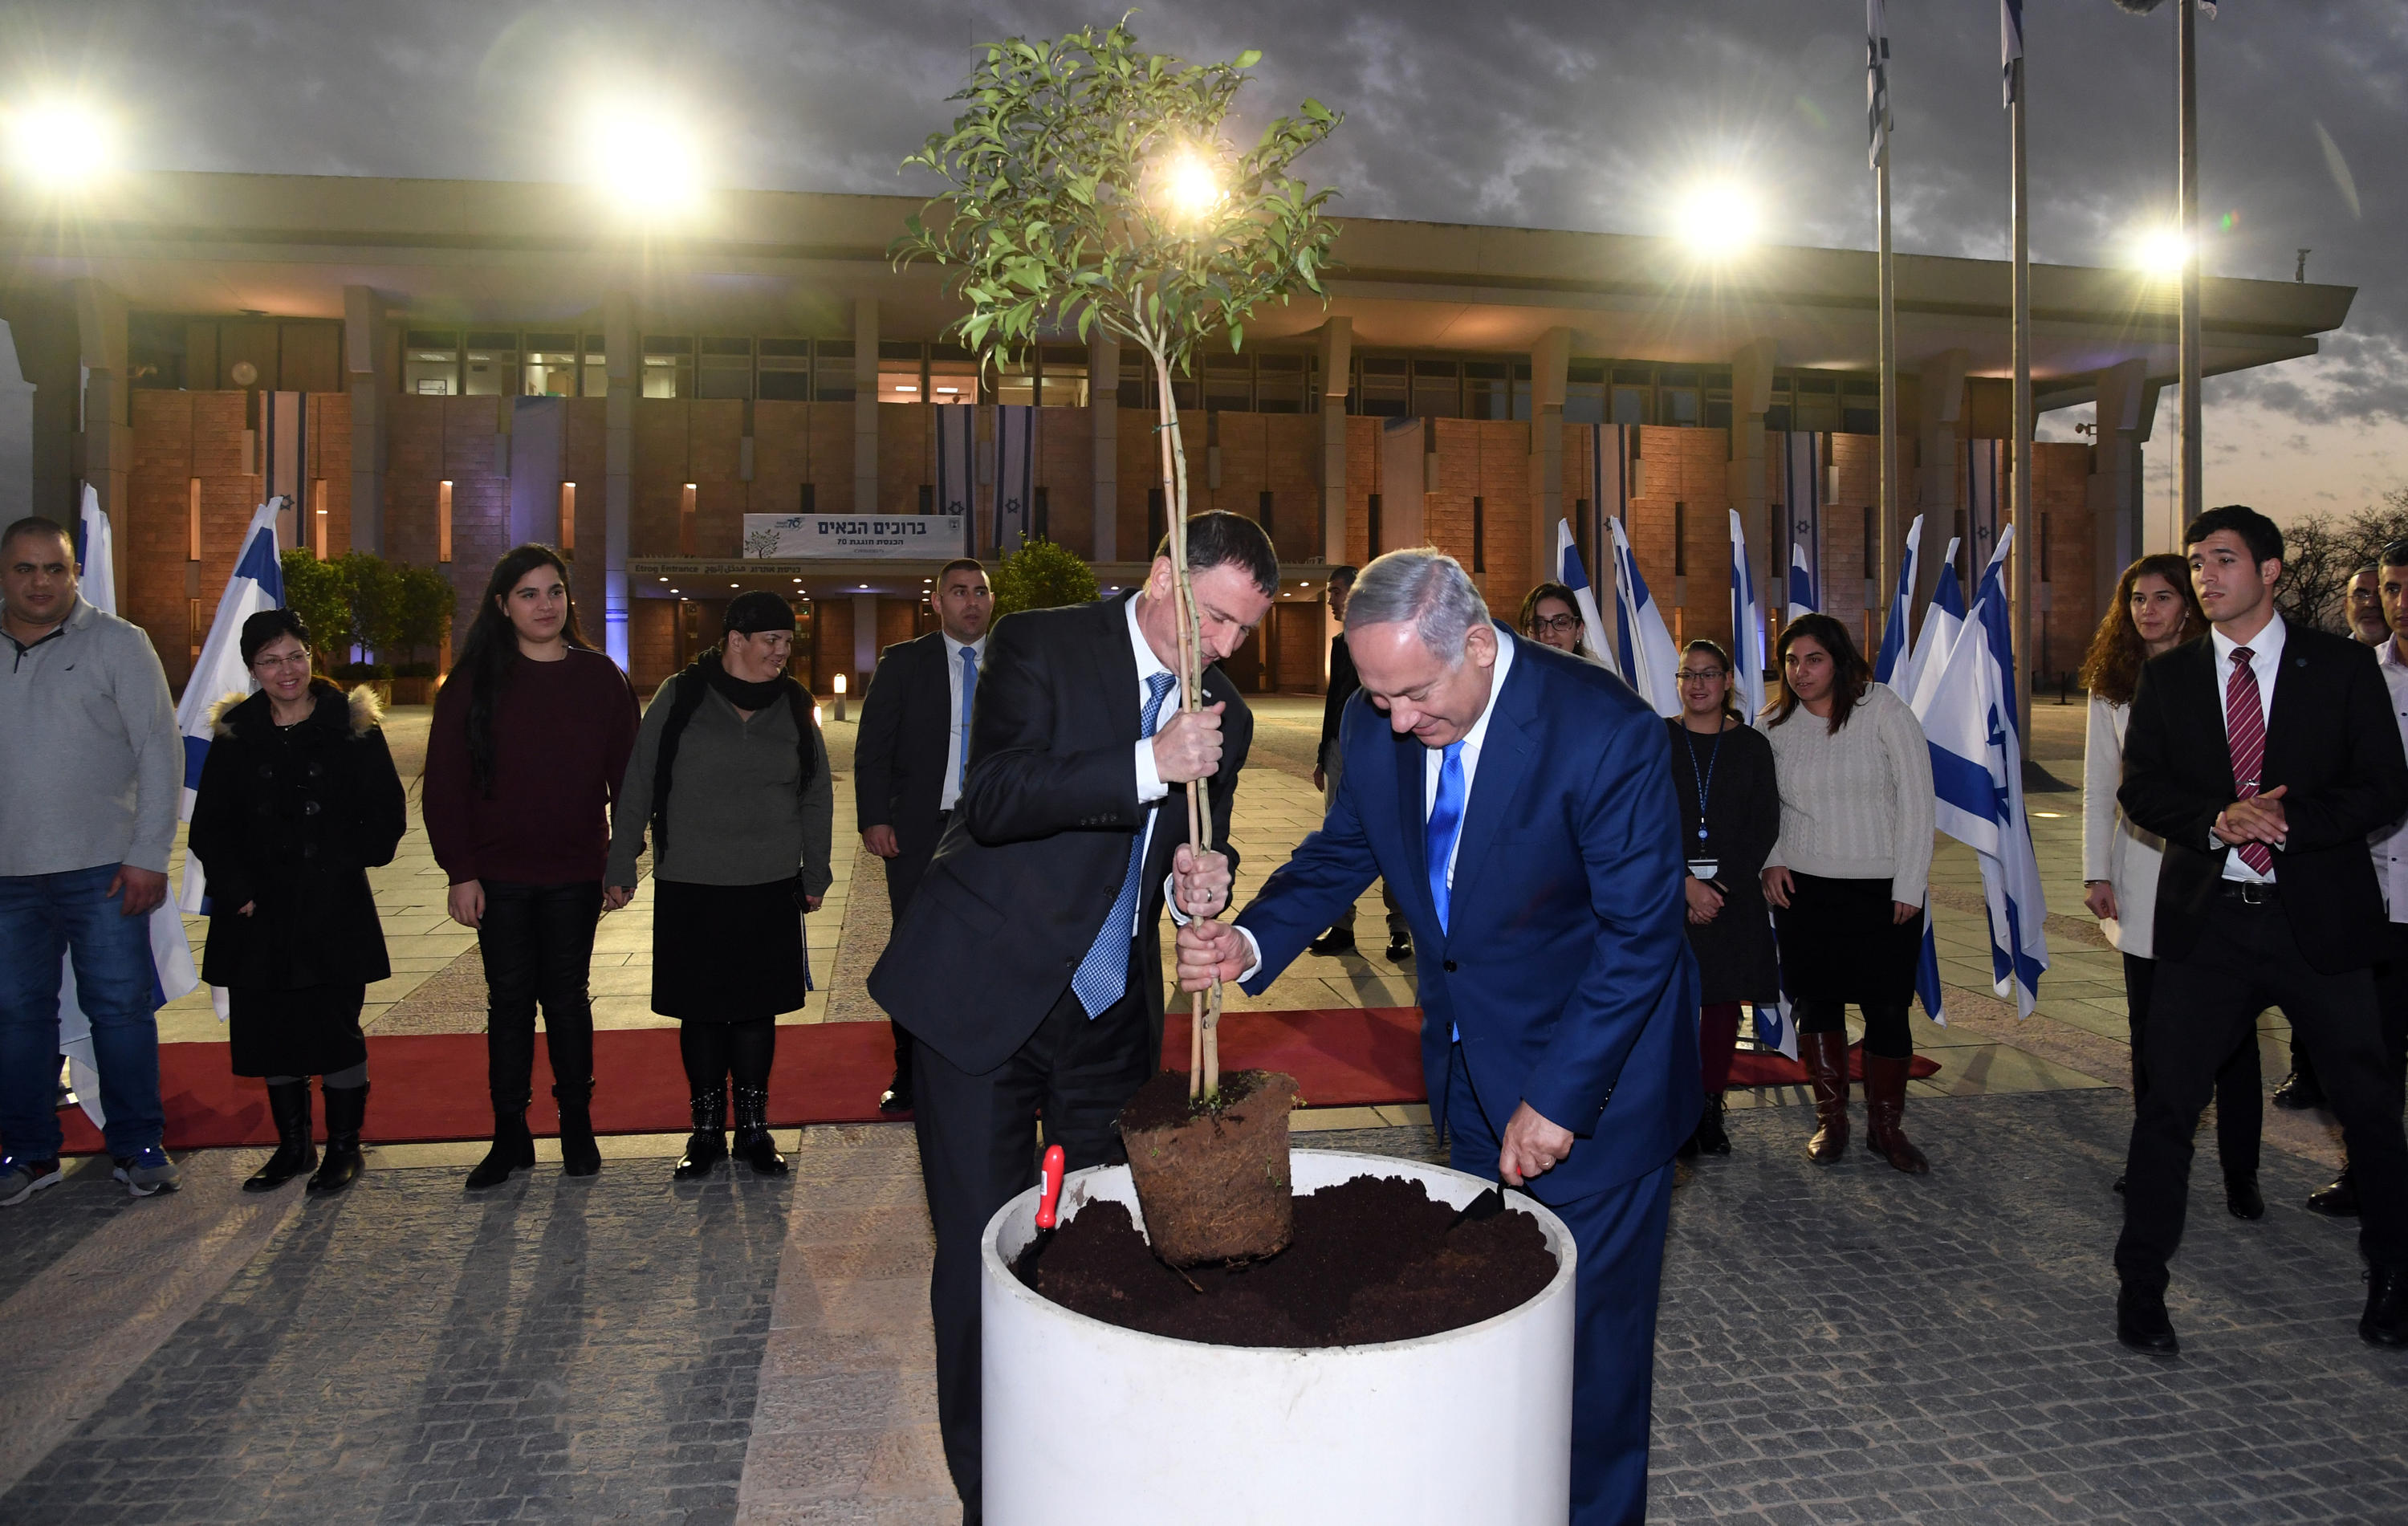 PM Netanyahu & Knesset Speaker Edelstein Plant a Tree